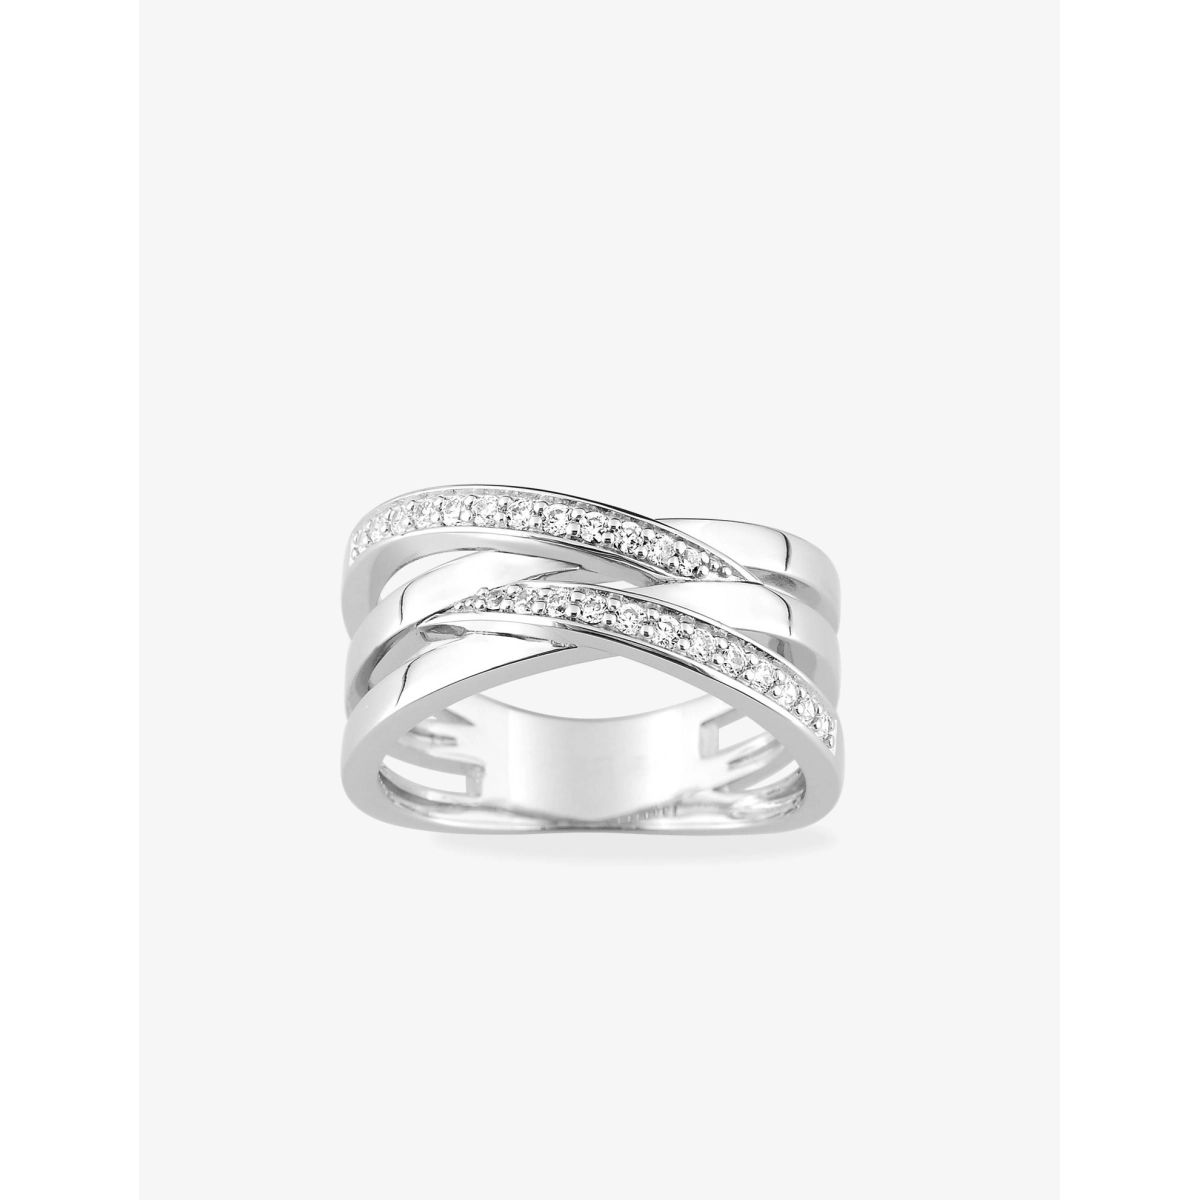 Ring w. cz rh925 Silver Lua Blanca  450155.9 - Size 59